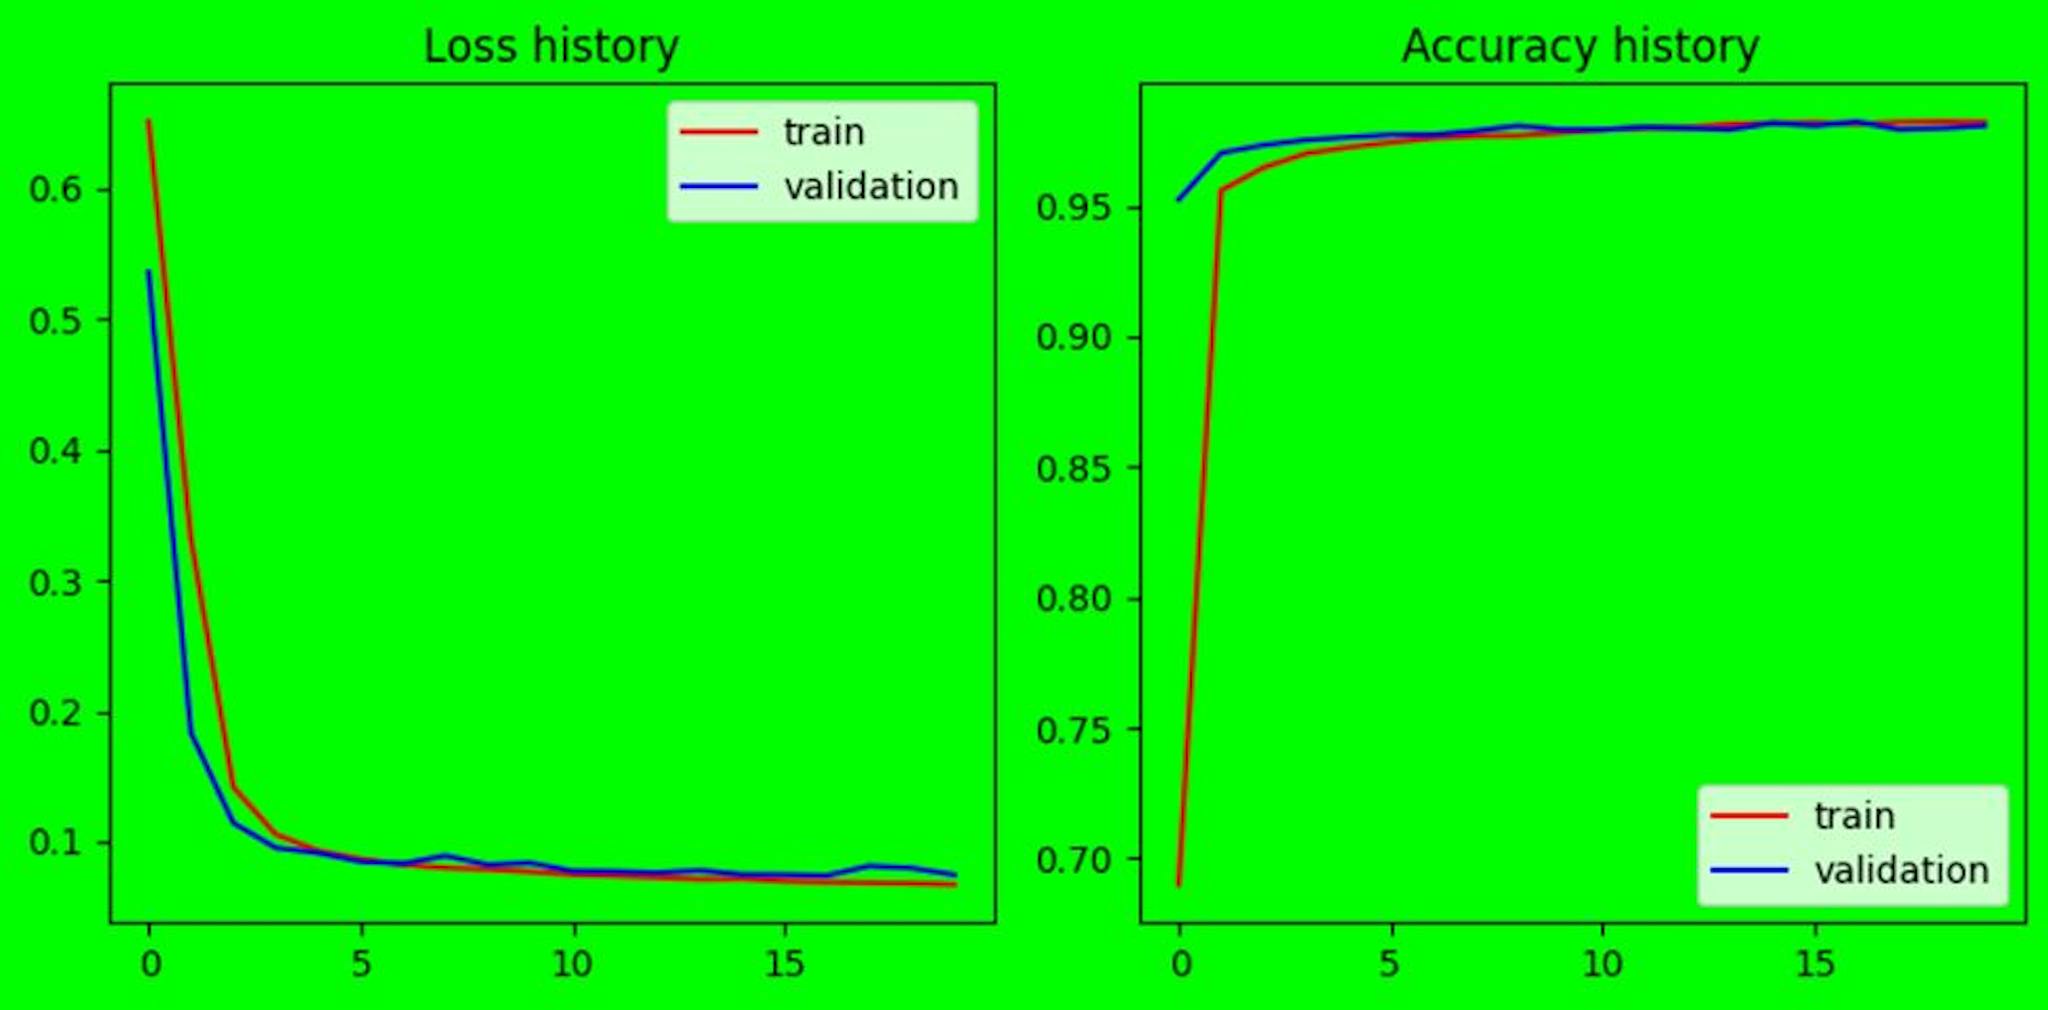 train and validation loss and accuracy history